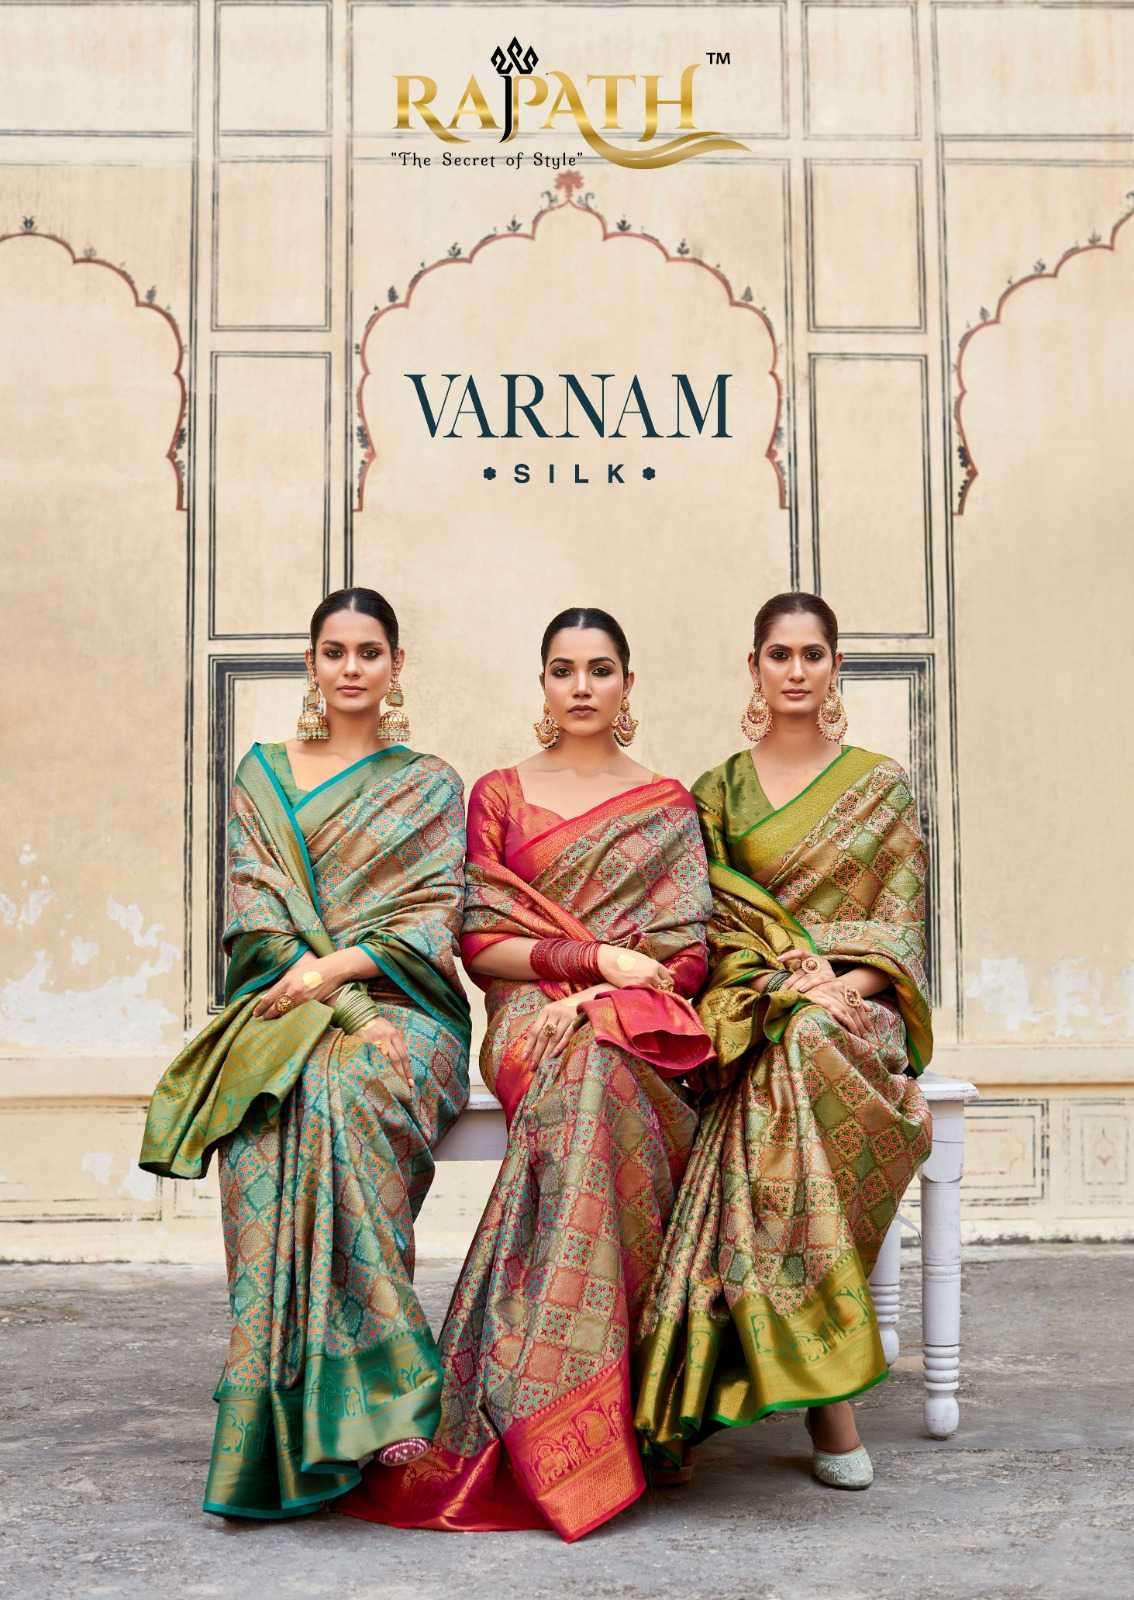 rajpath varnam silk series 280001-280006 Pure Dharmavaram Silk saree